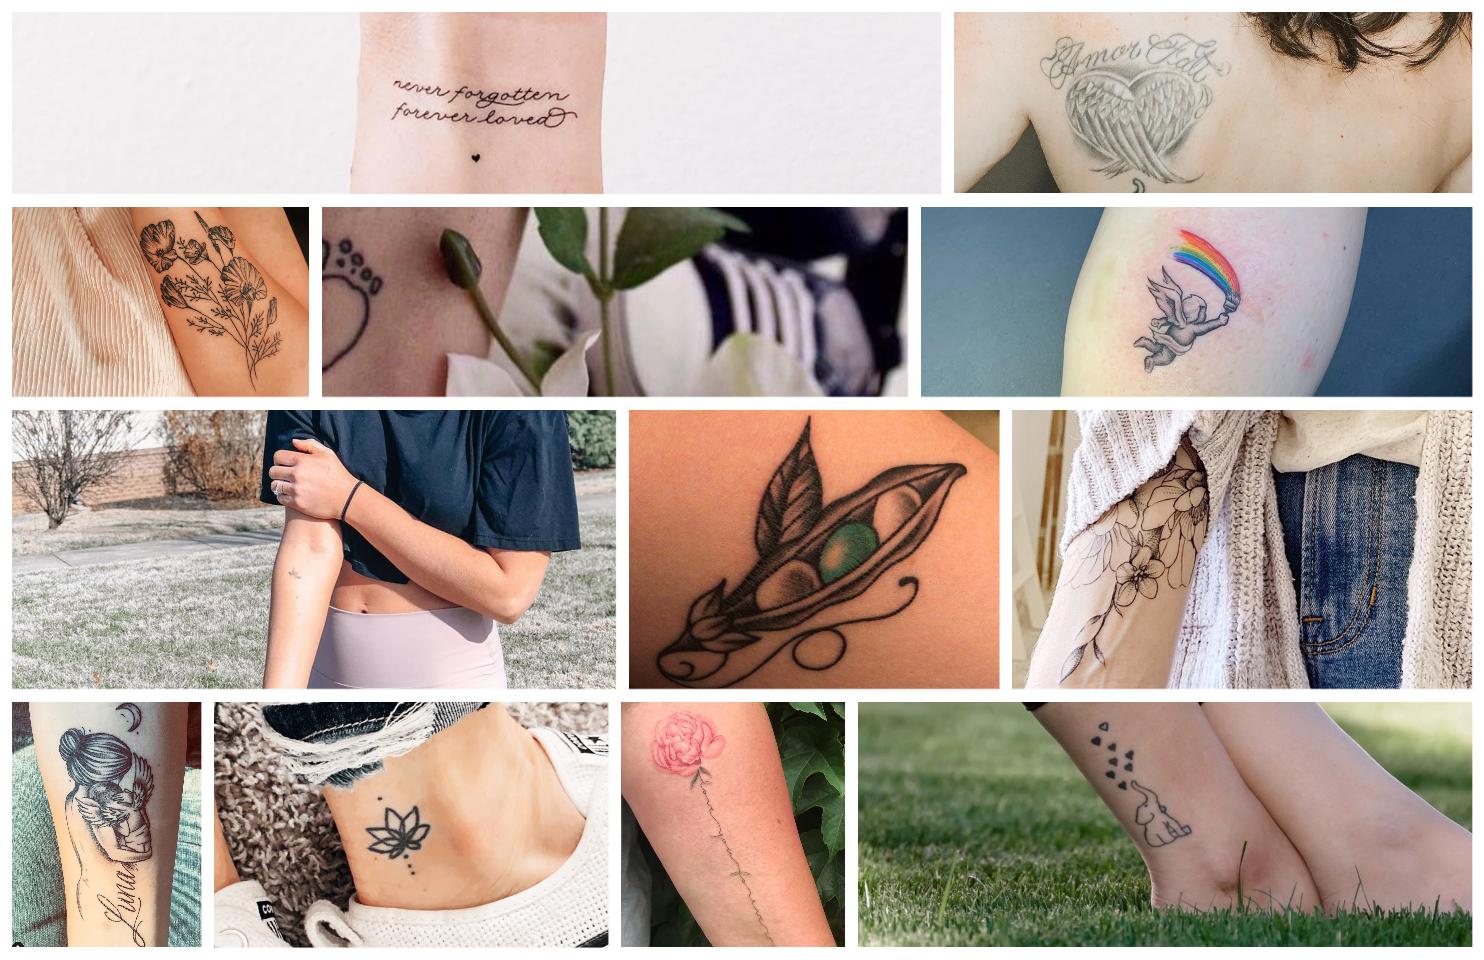 Miscarriage tattoo ideas